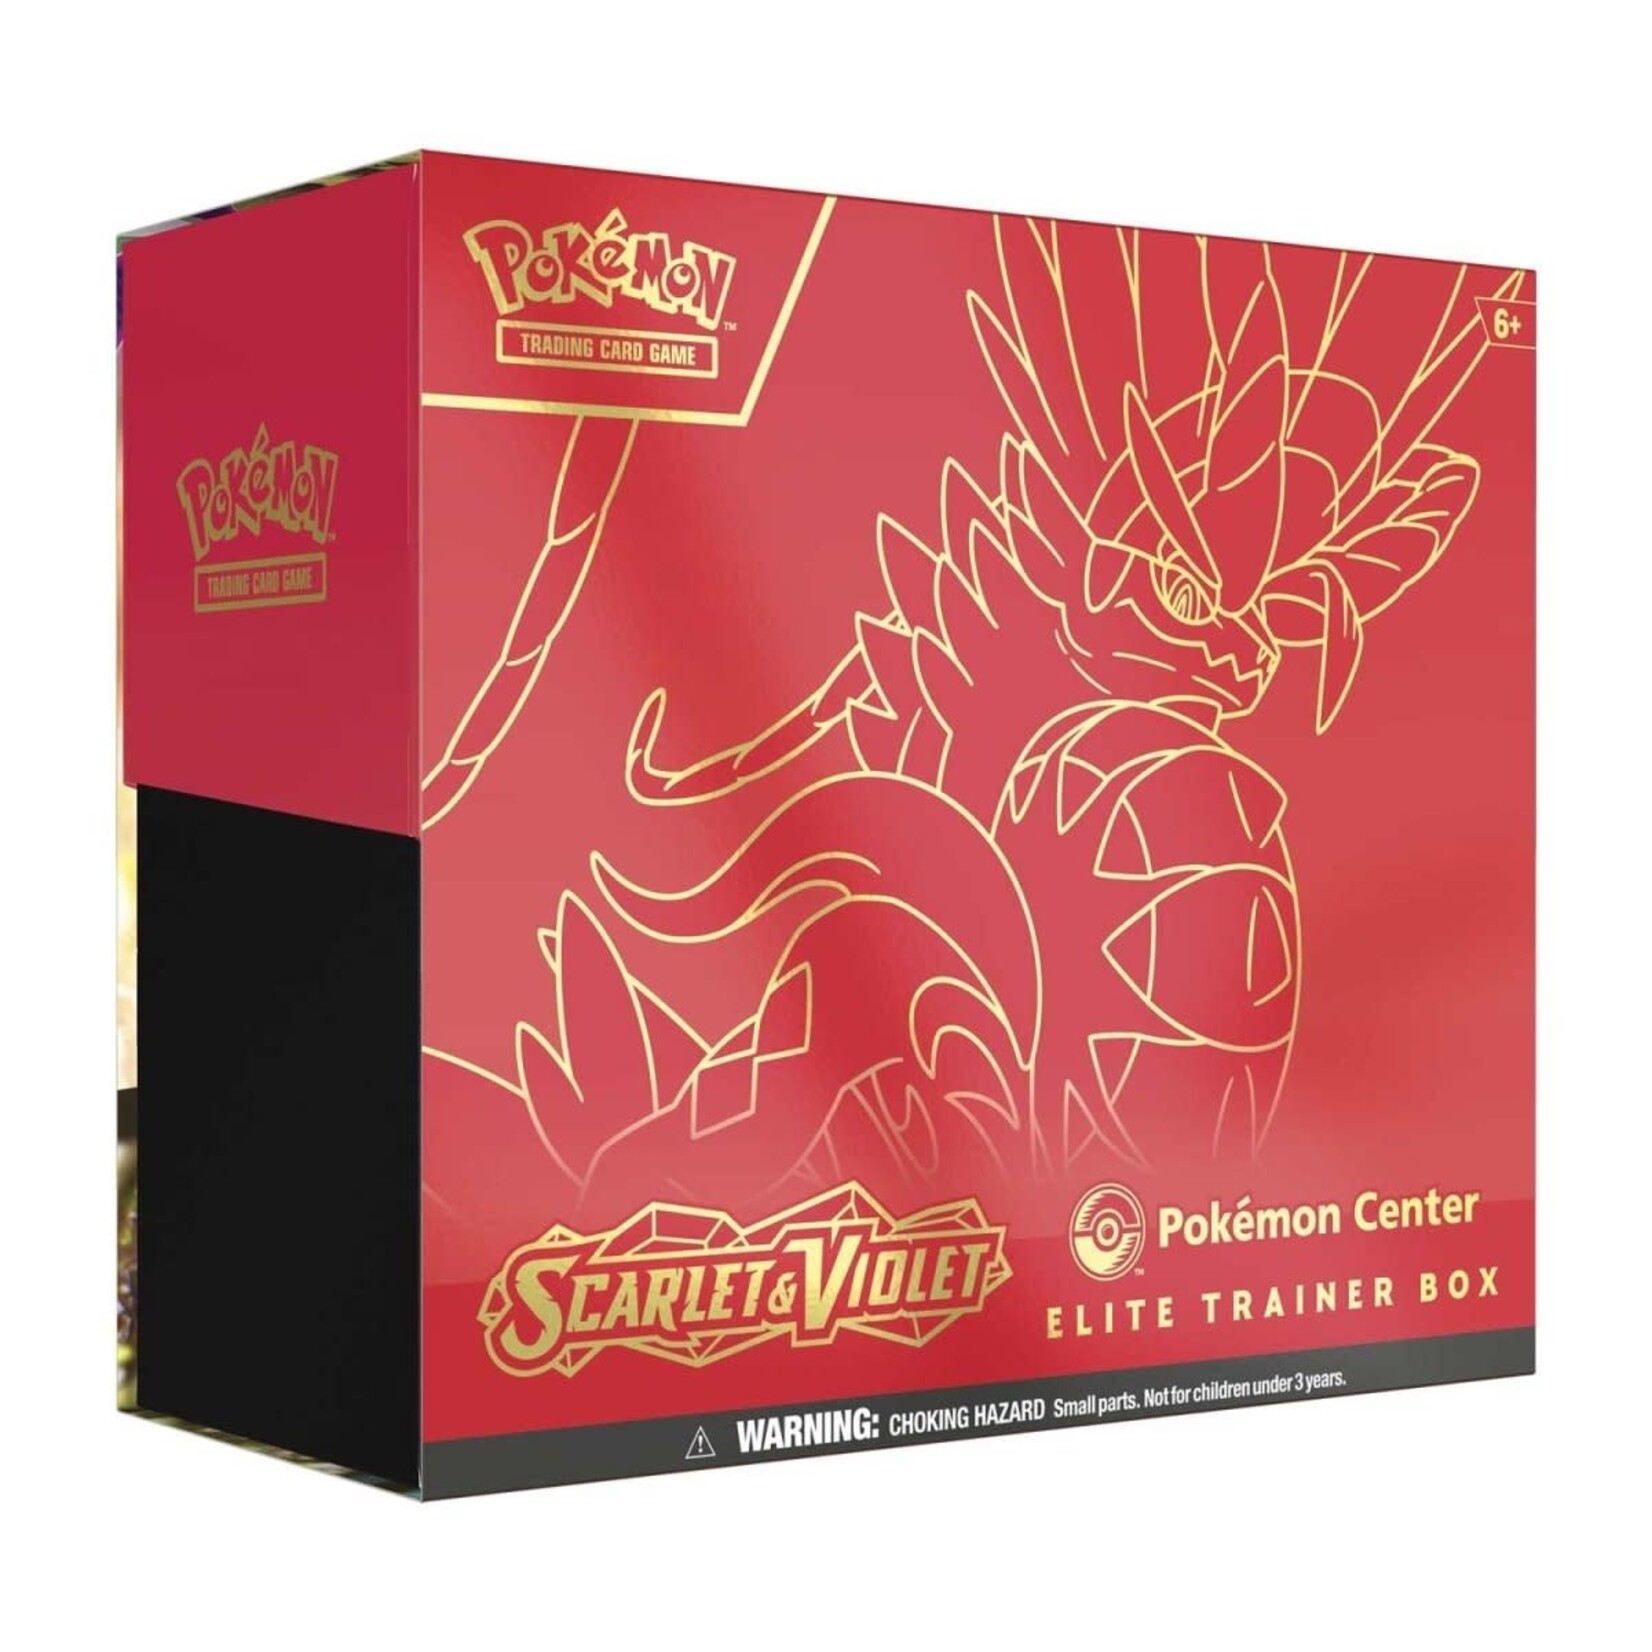 Pokémon Pokemon - Scarlet & Violet Elite Trainer Box